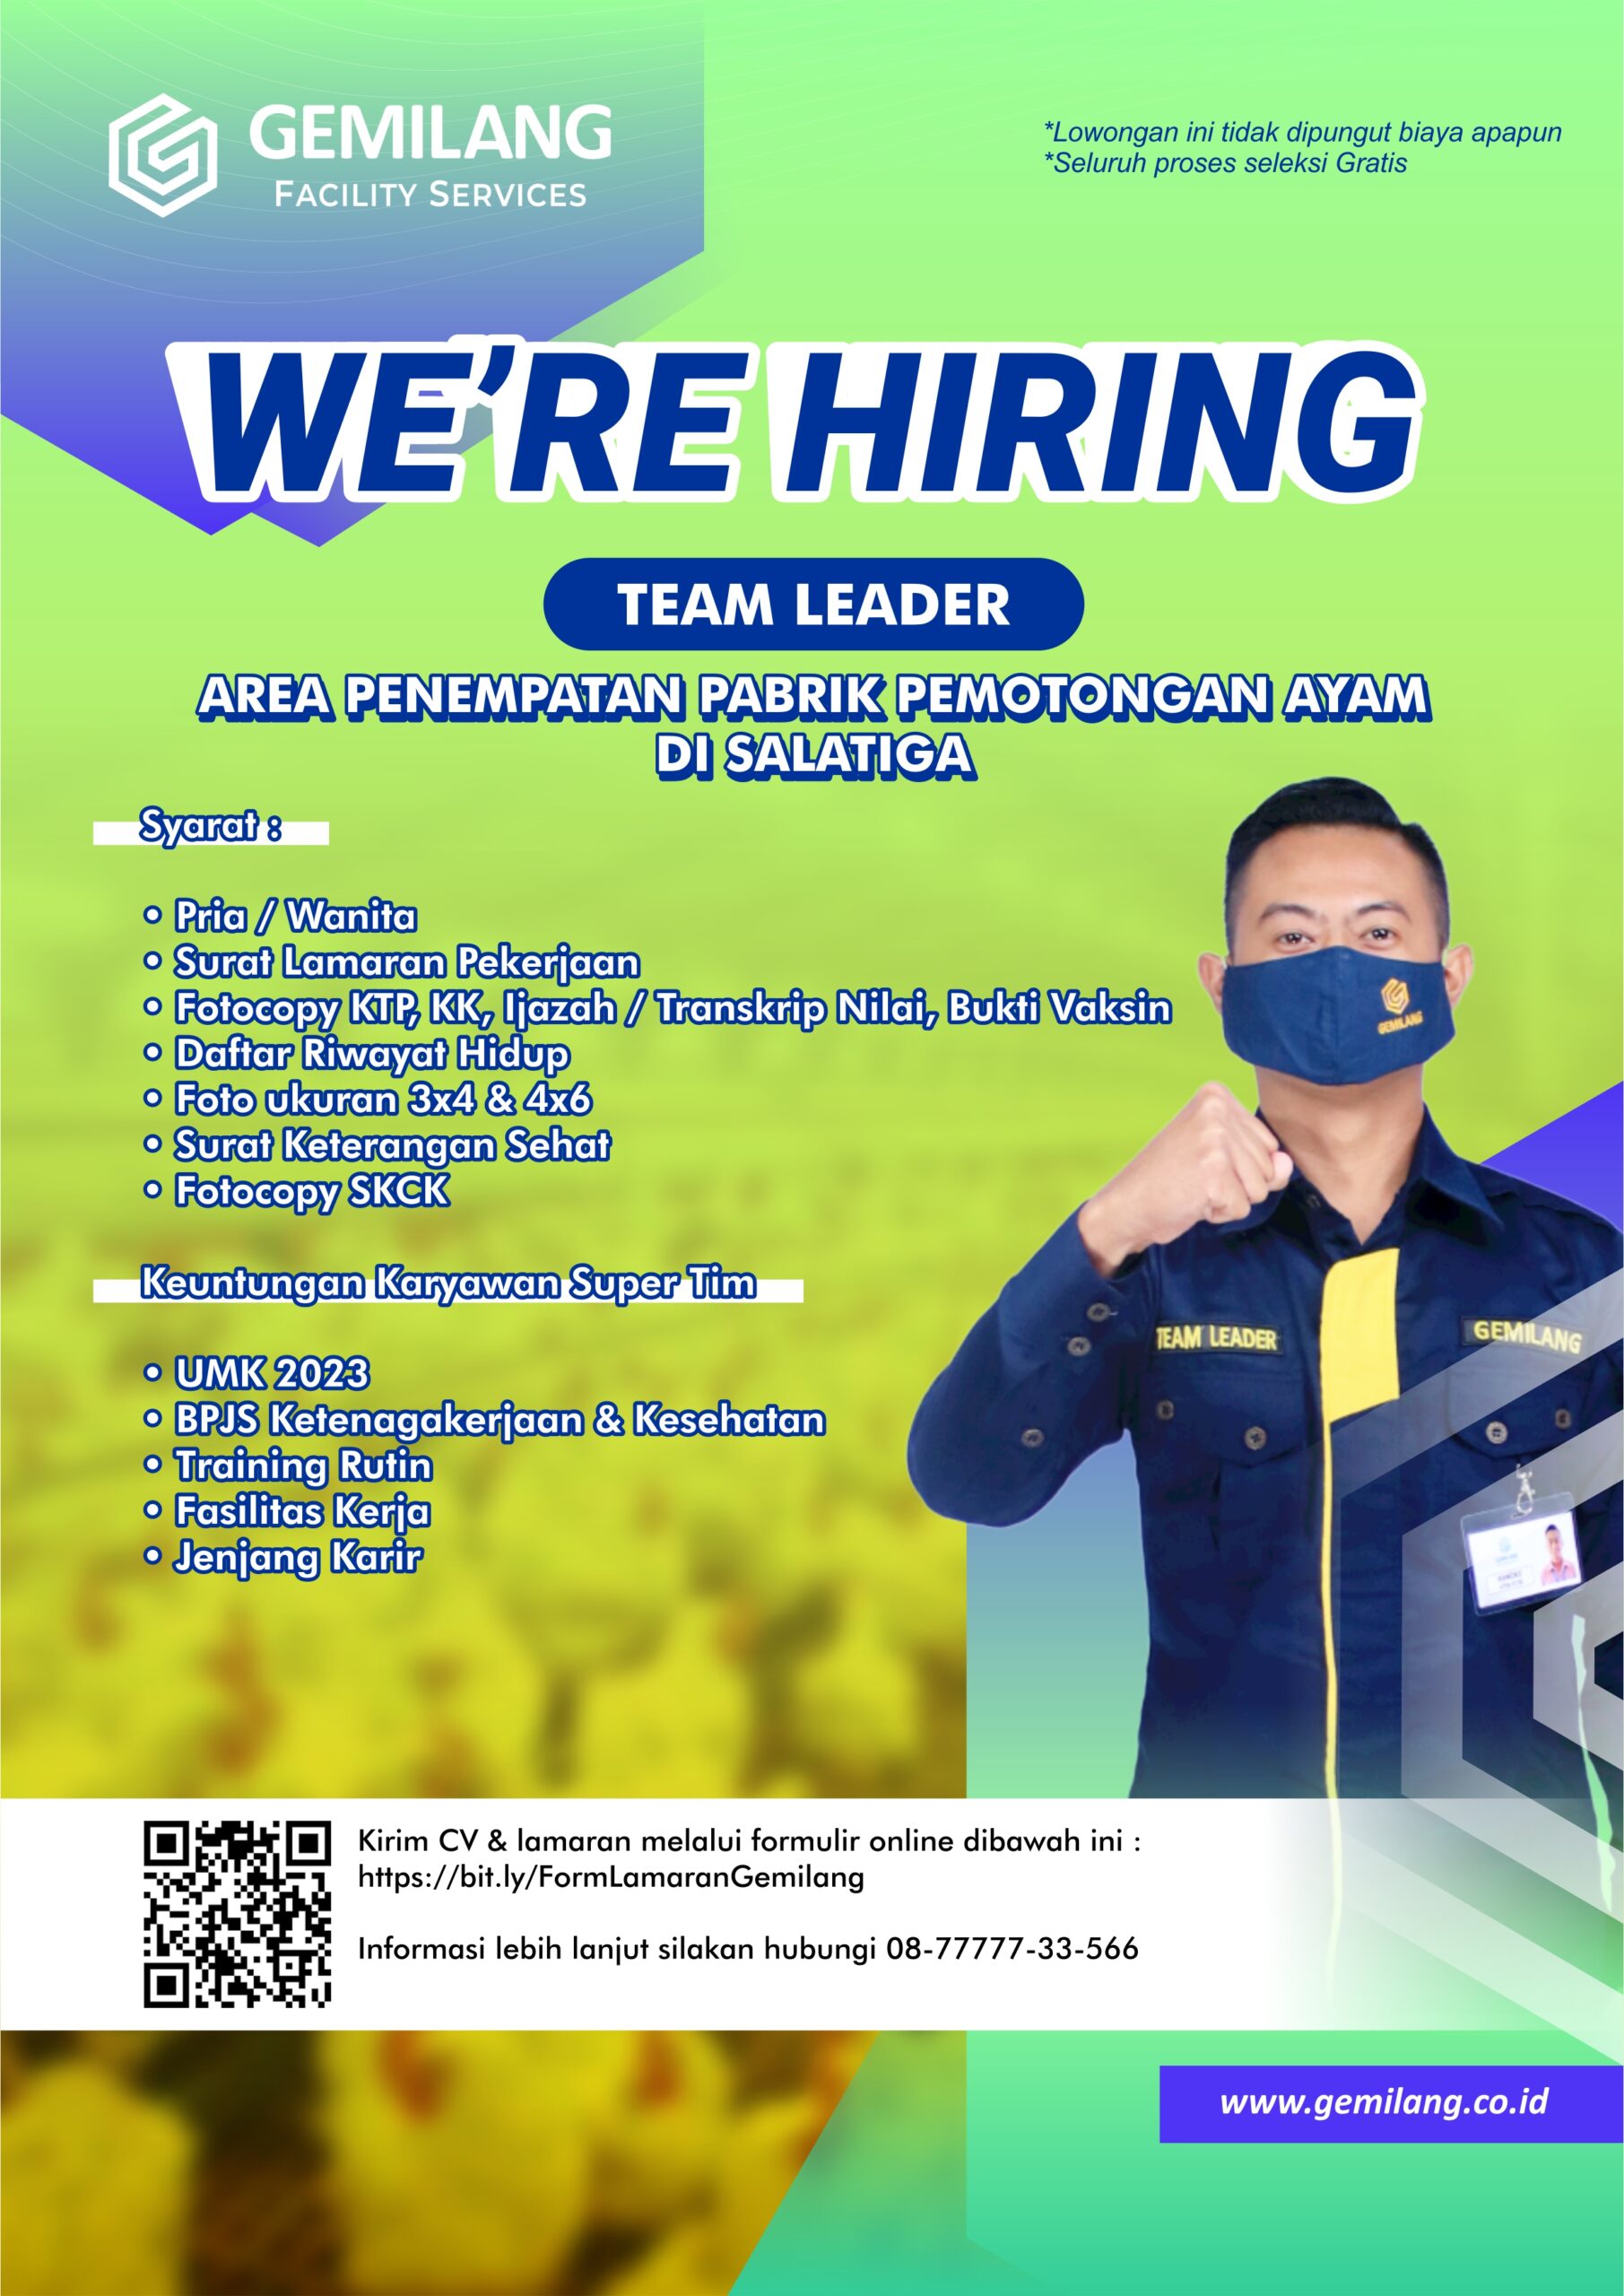 Lowongan Pekerjaan - Team Leader Pokphand Salatiga